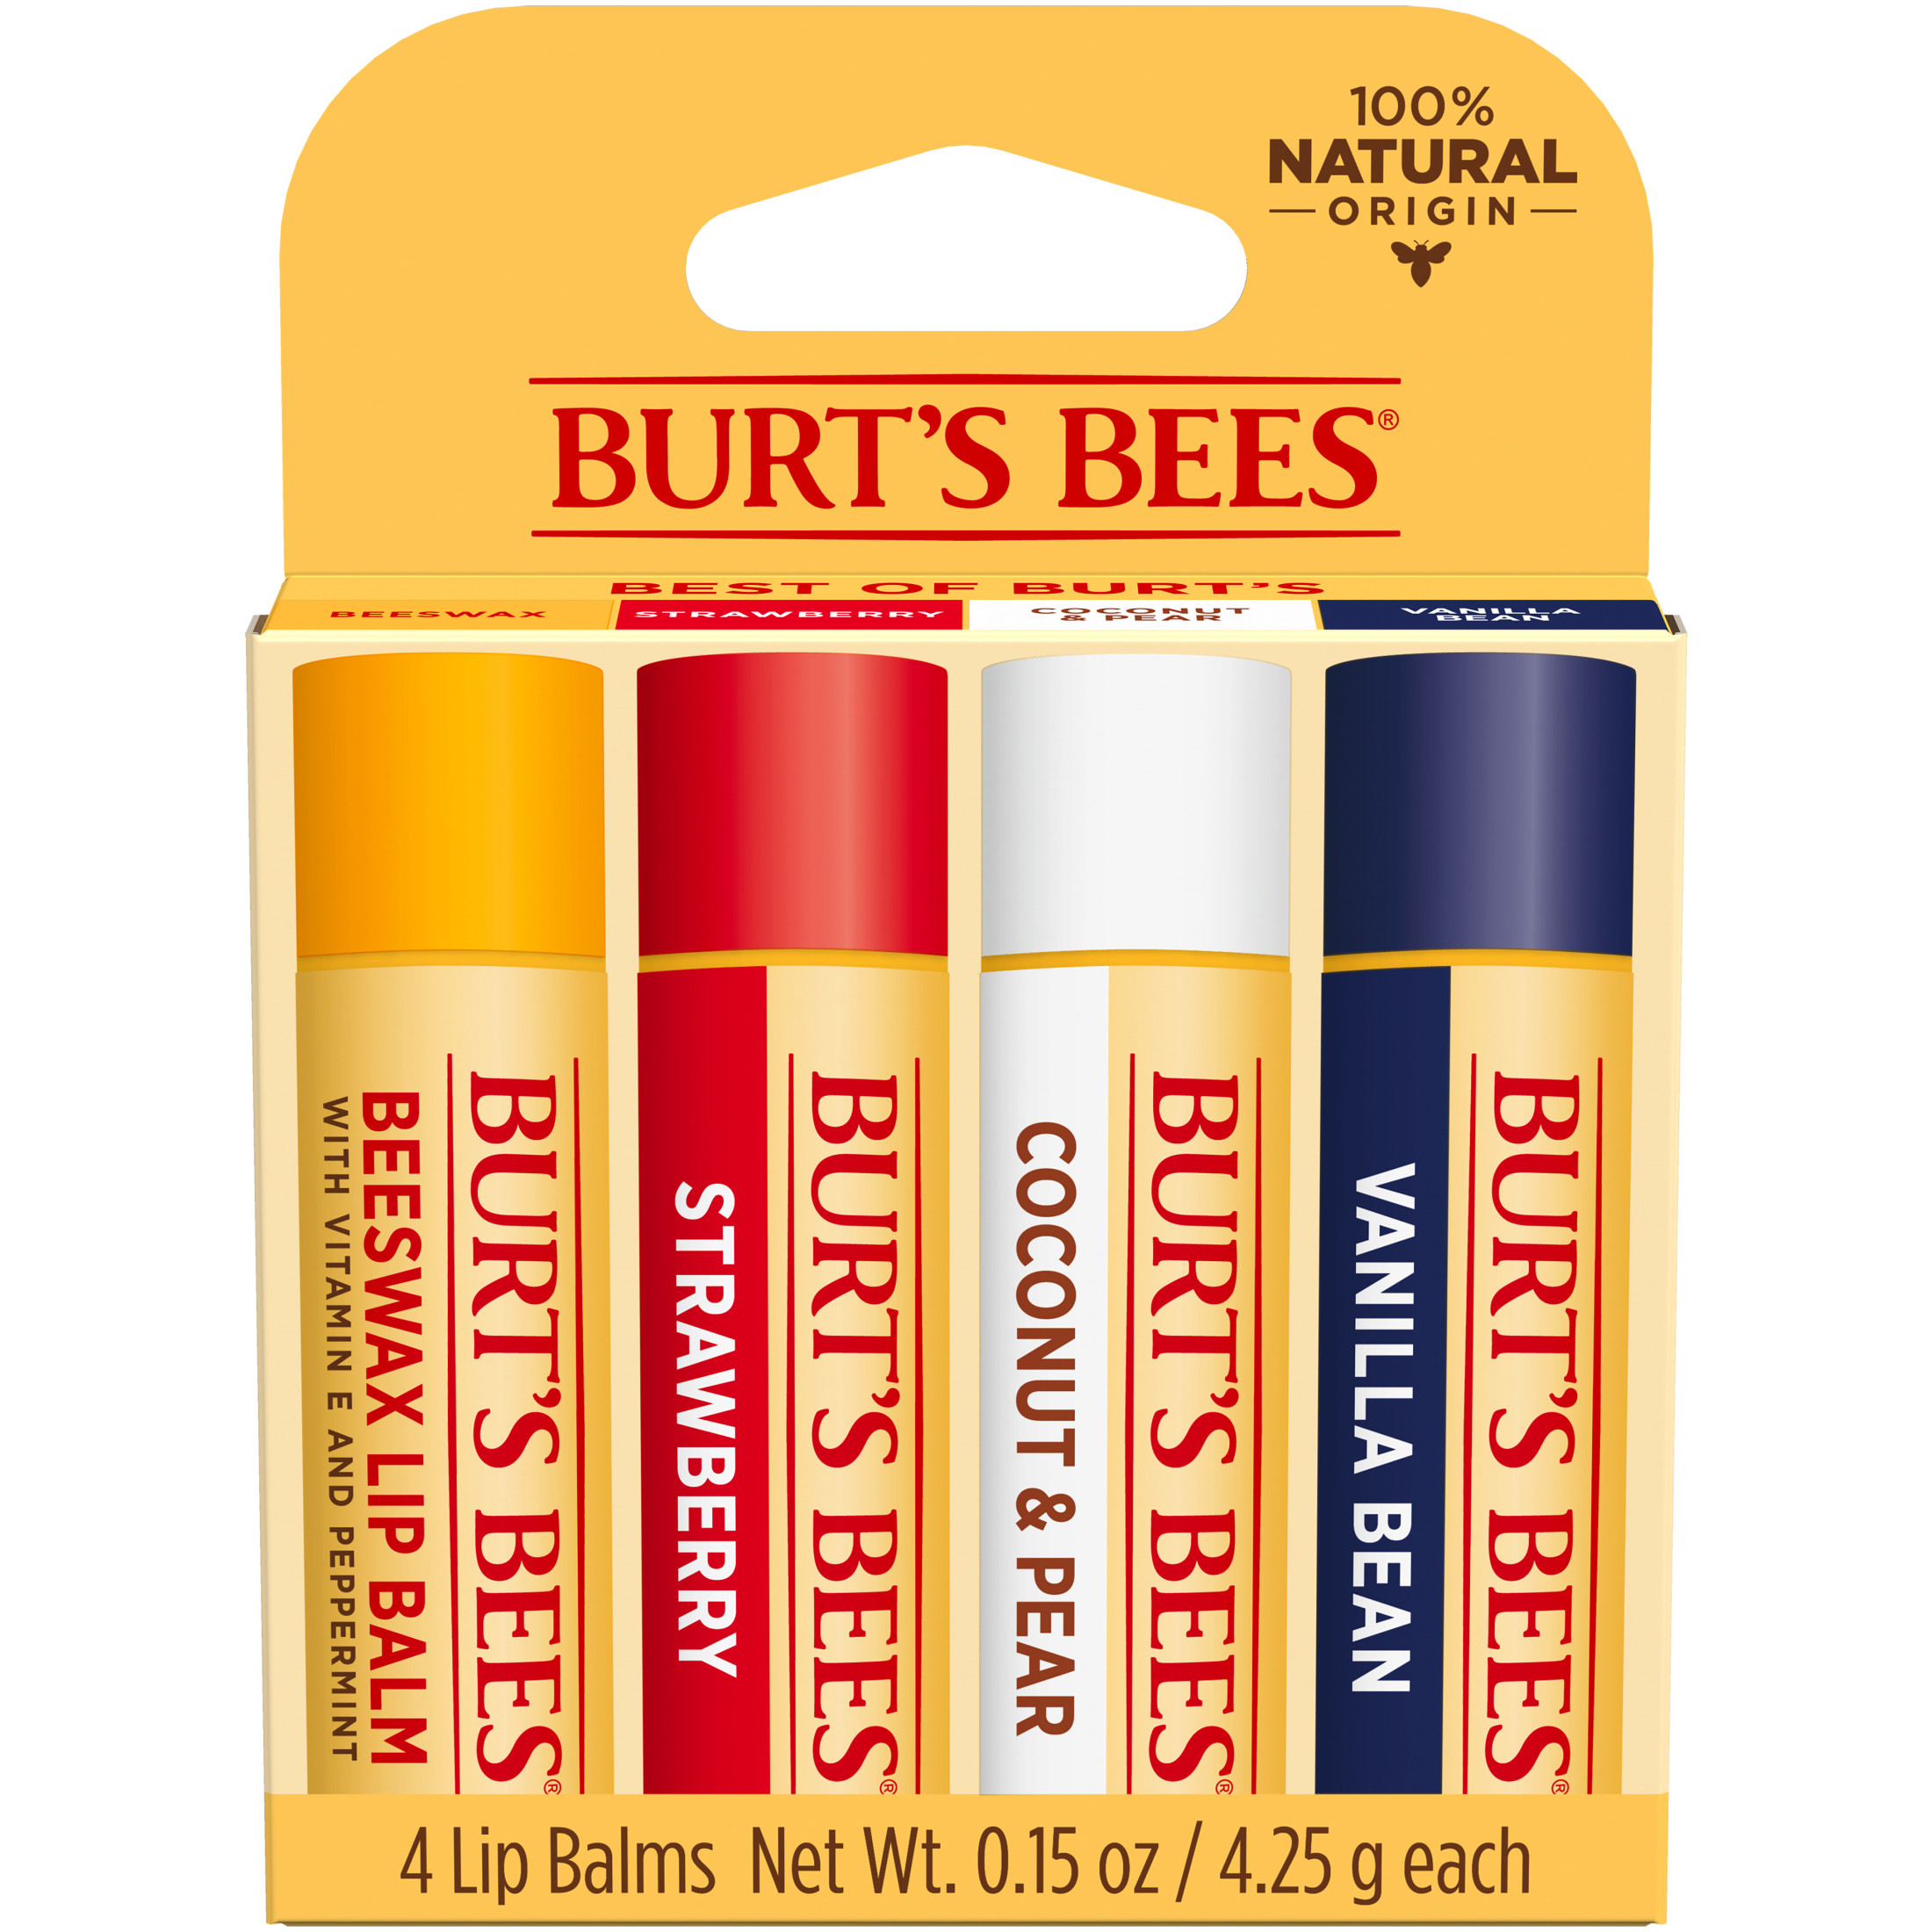 Burt's Bees 100% Natural Origin Moisturizing Lip Balm with Beeswax, Variety Pack, 4 Tubes - image 3 of 11